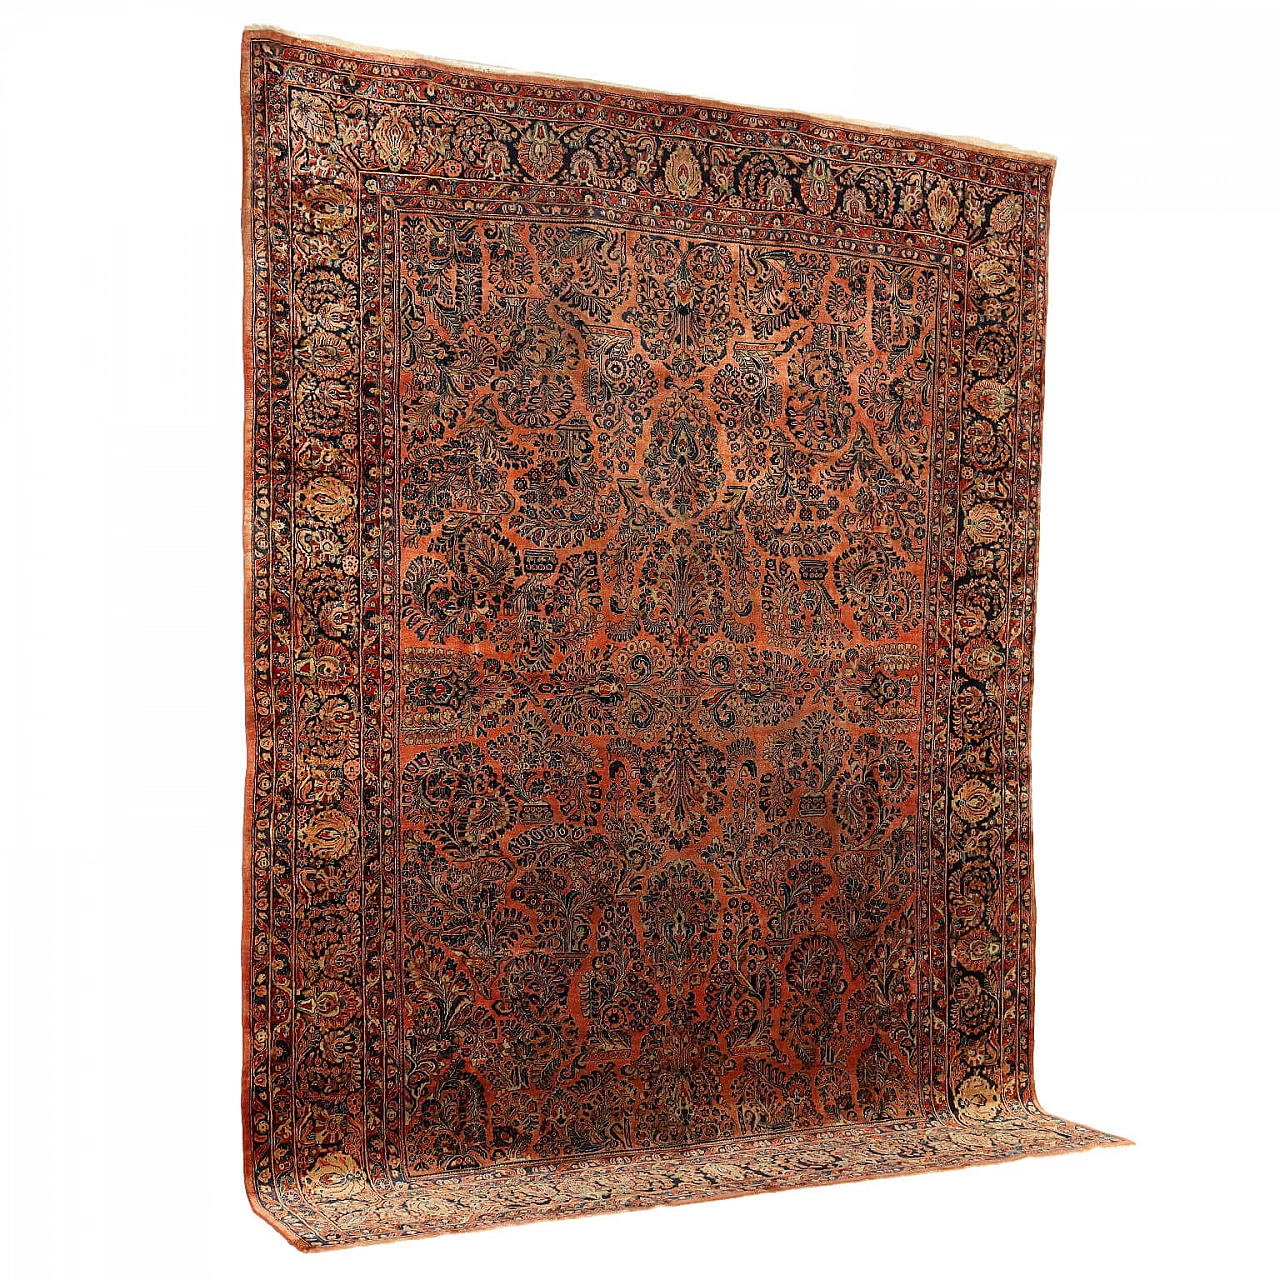 Iranian Saruk American cotton and wool carpet 1